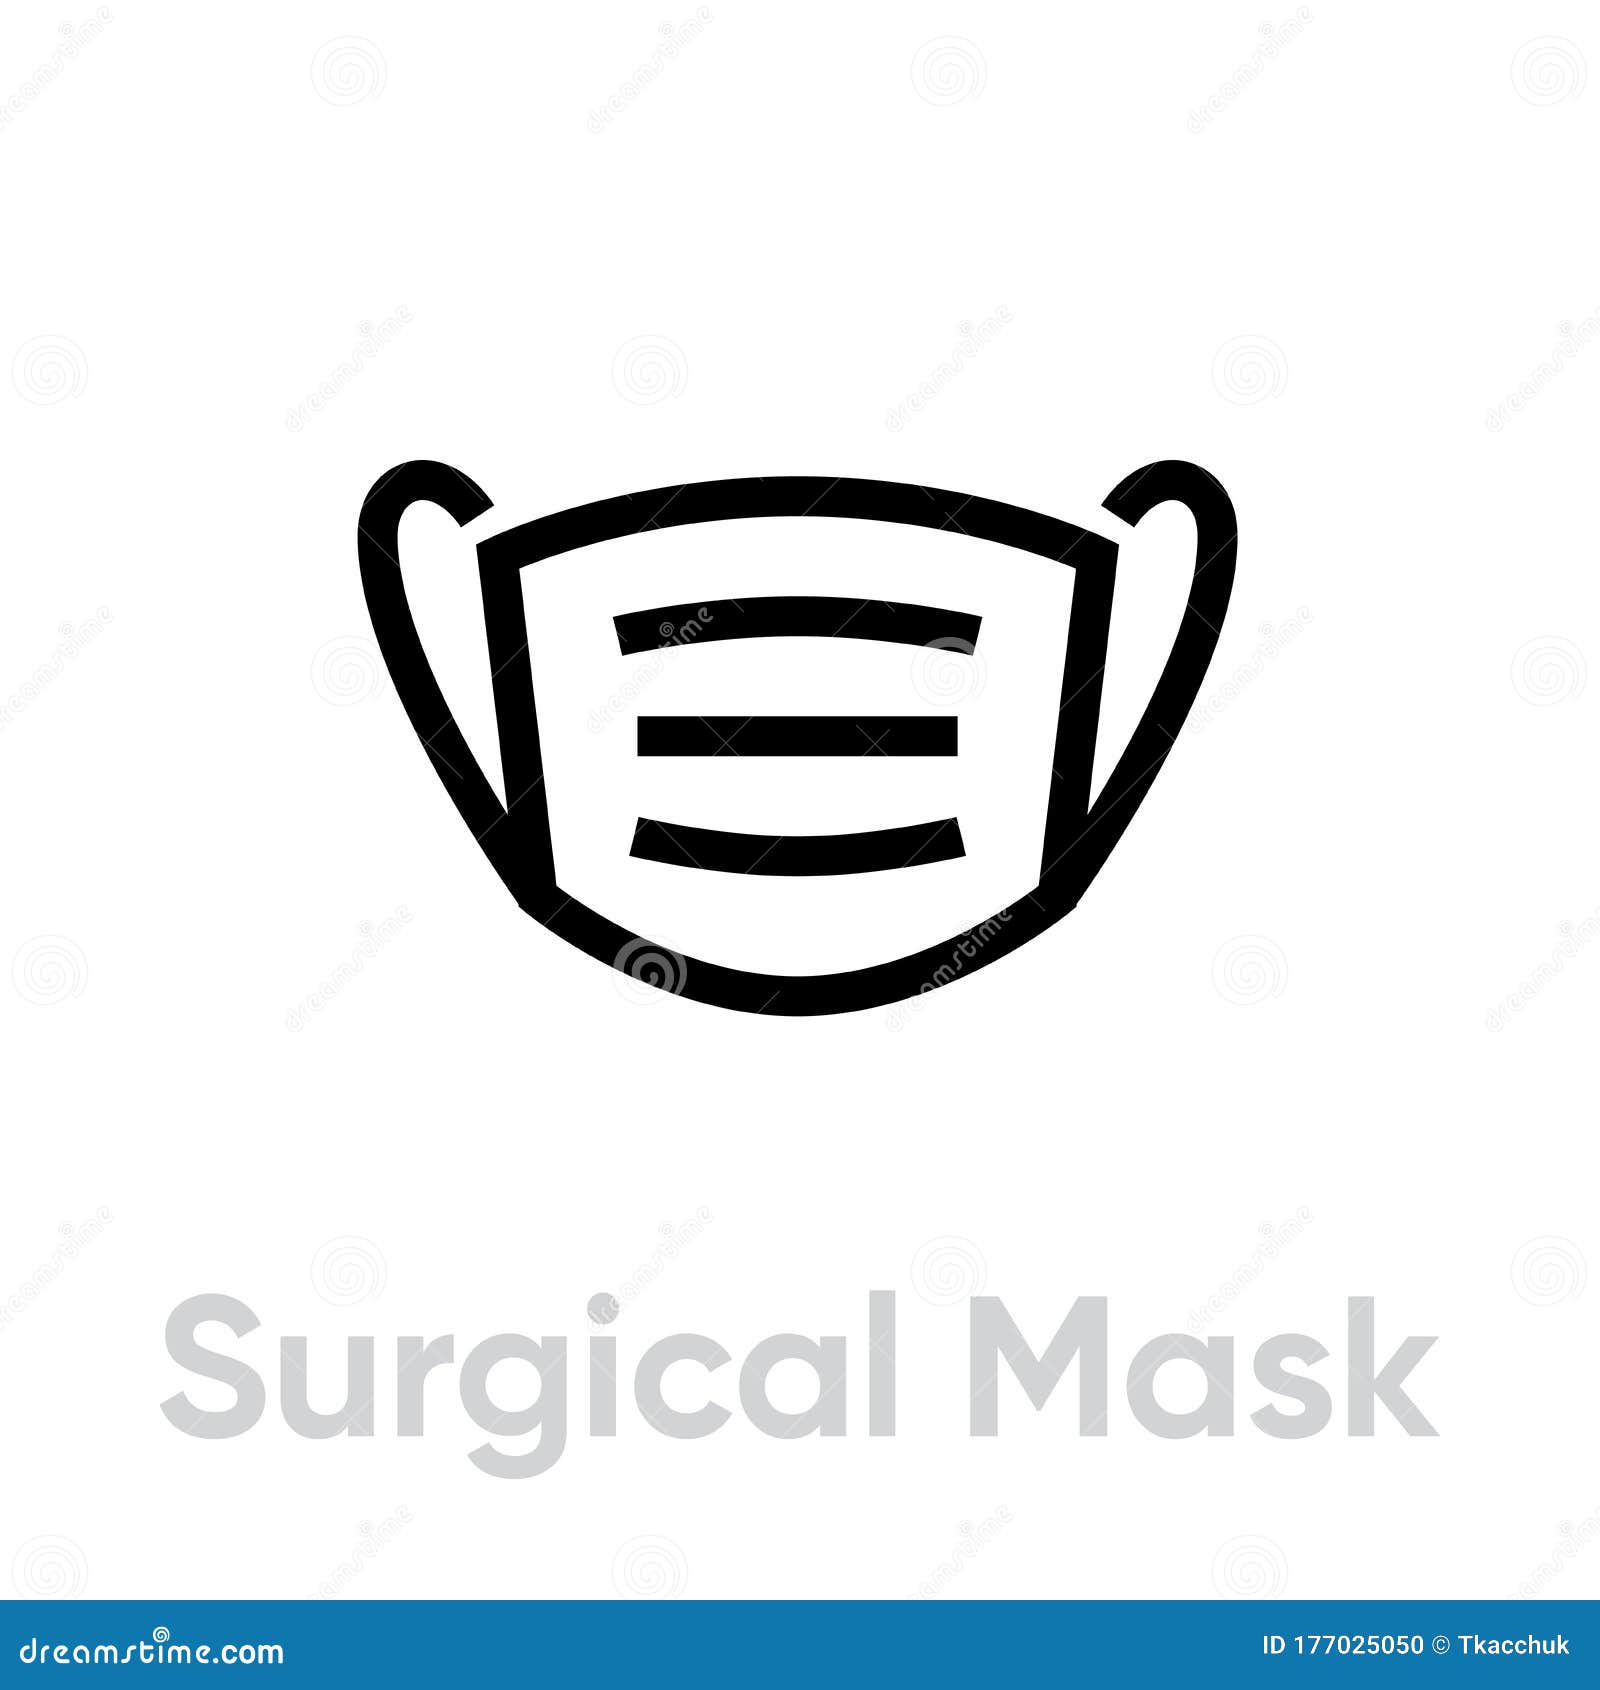 surgical mask icon. editable line .